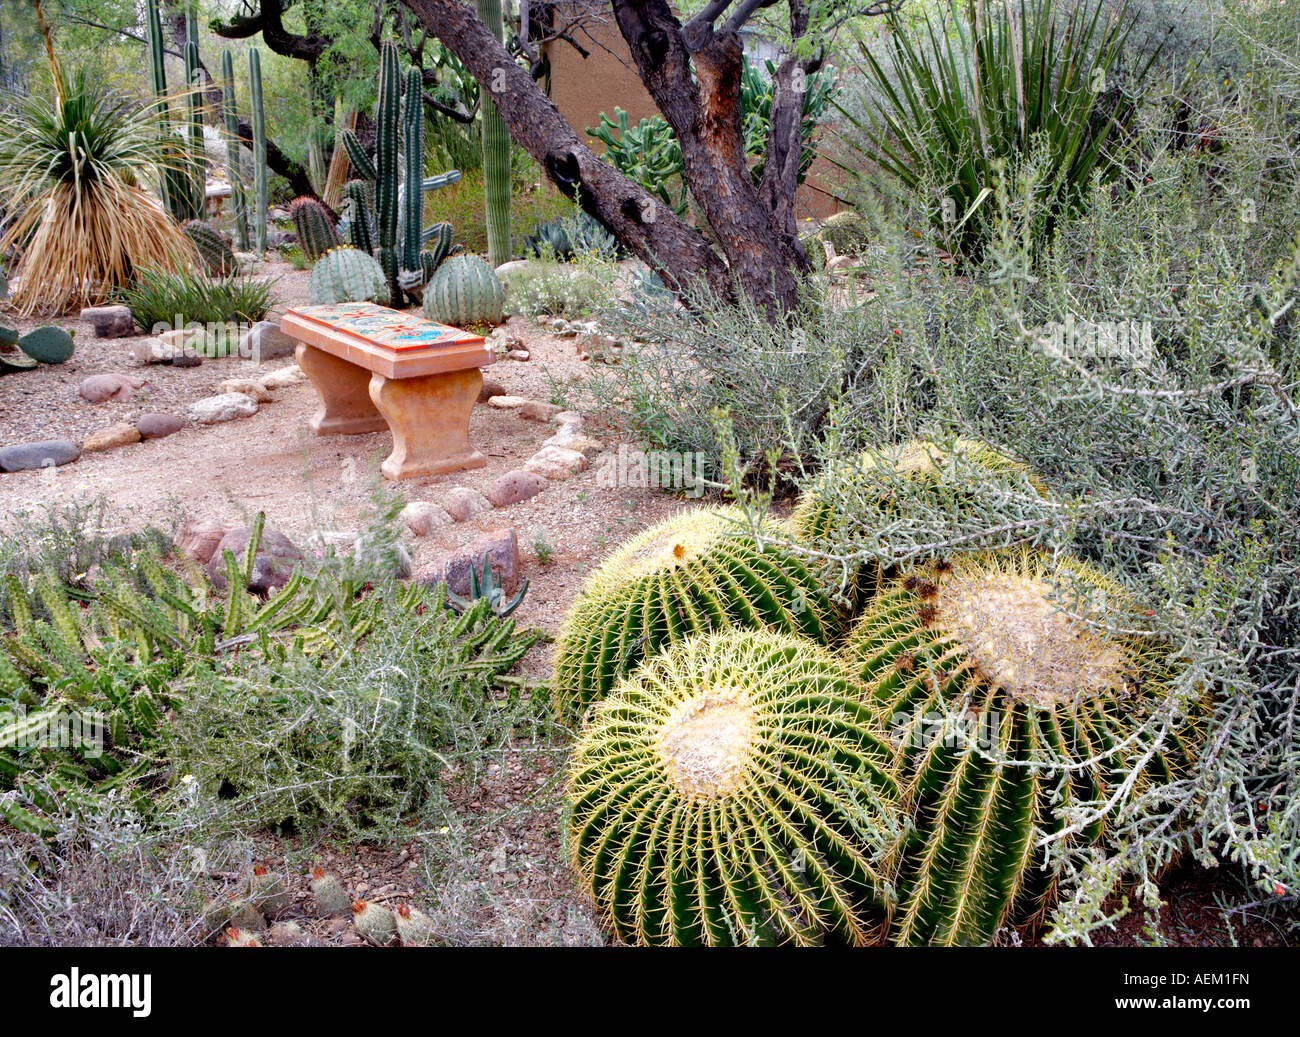 Cactus Garden With Bench In Tucson Botanical Gardens Tucson